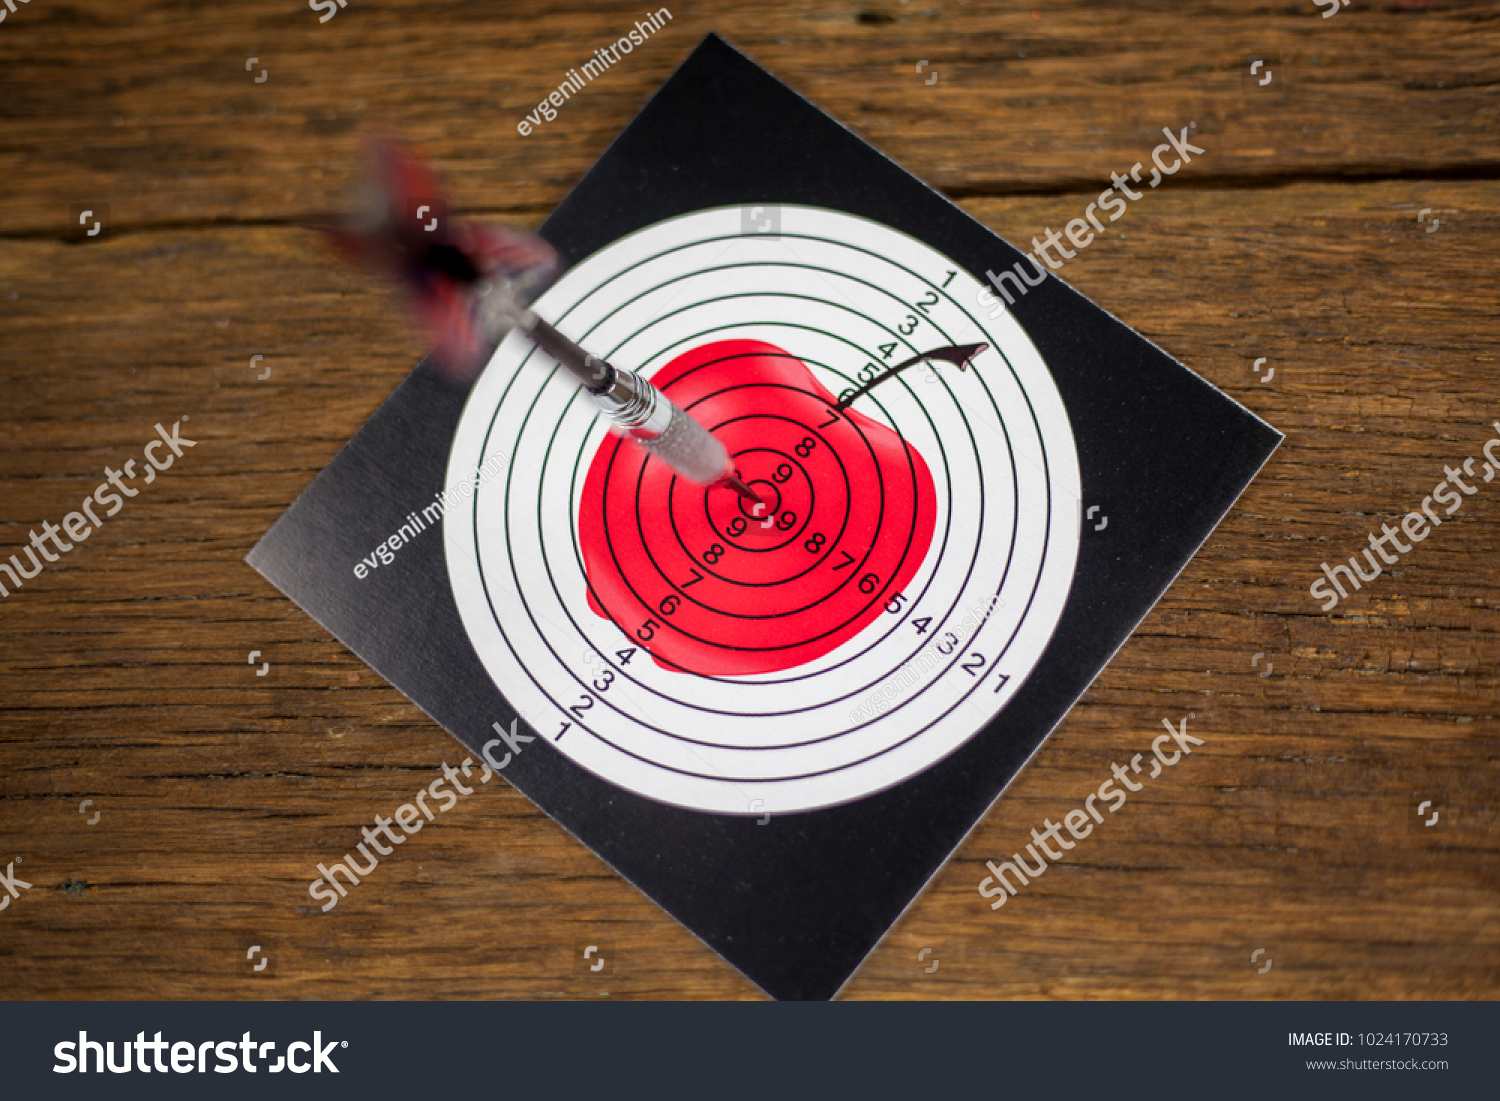 ck one target